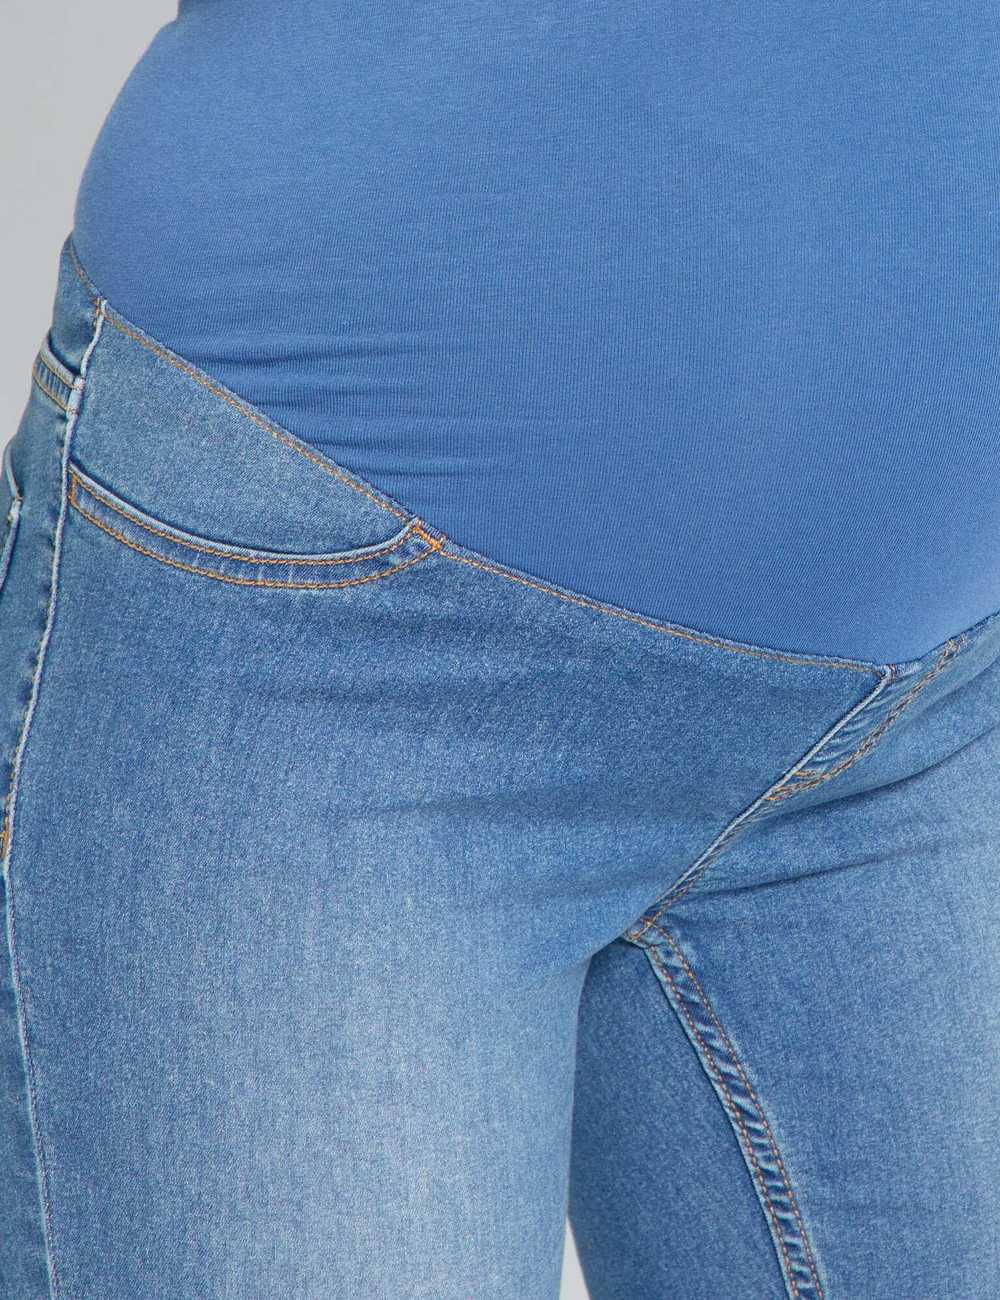 Buy Skinny maternity jeans Online in Dubai & the UAE